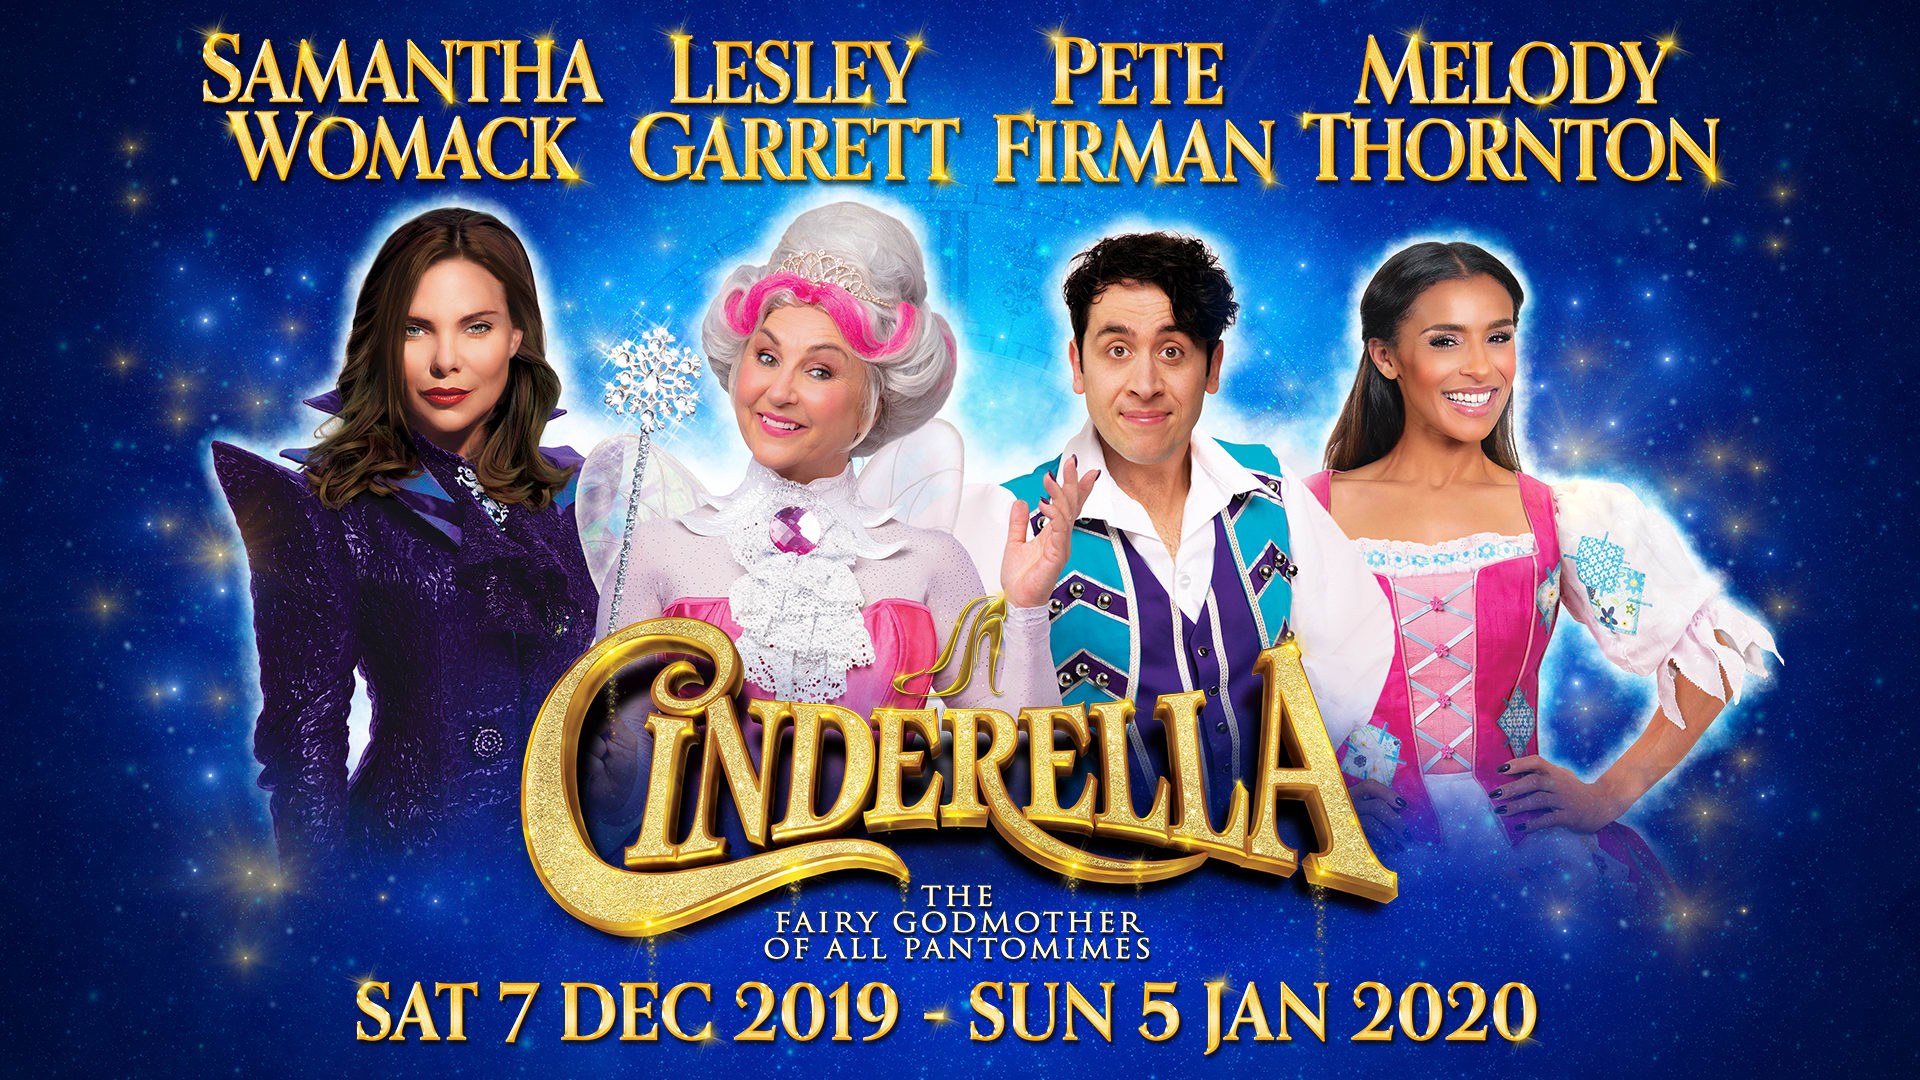 Cinderella at New Wimbledon Theatre